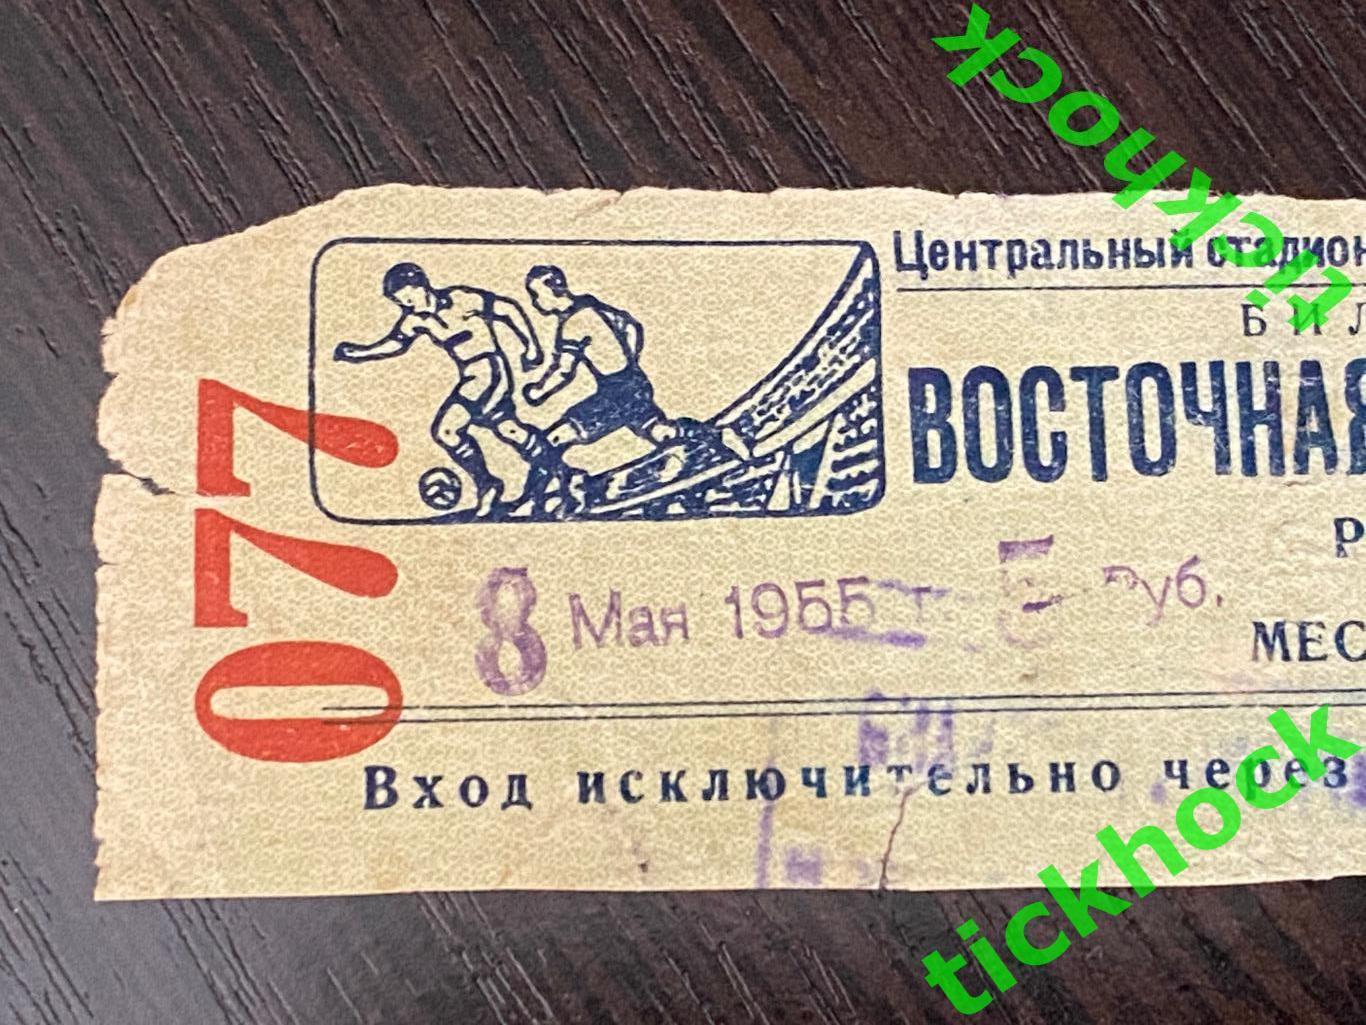 Спартак Москва - ЦДСА / ЦСКА Москва 08.05.1955-- билет -- восточная трибуна 1